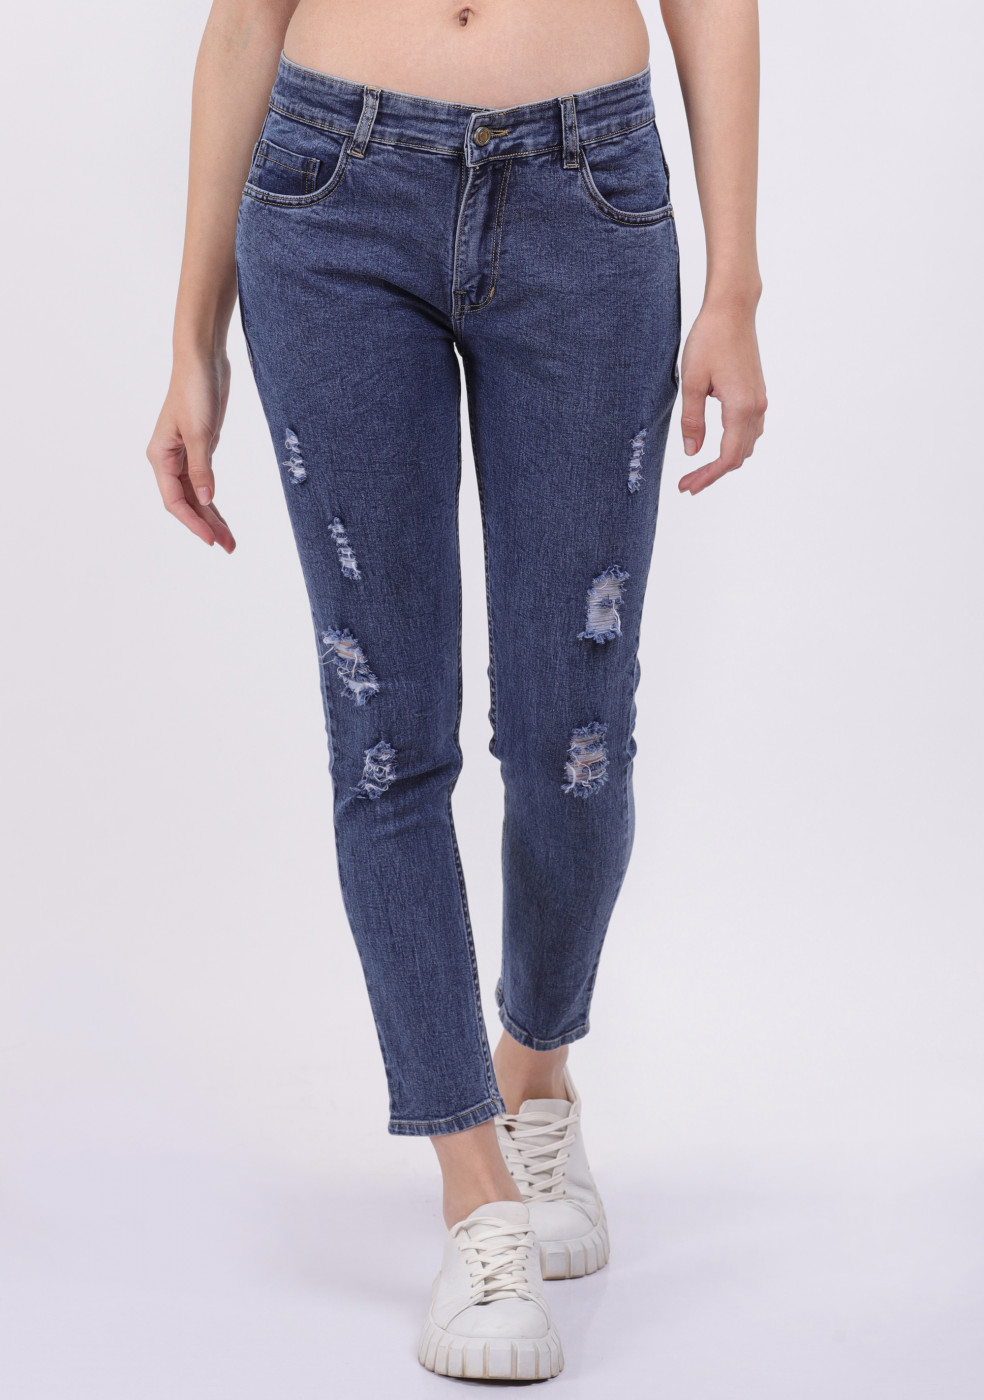 Jeans for Men - Buy Mens Jeans Online in India - BasicsLife